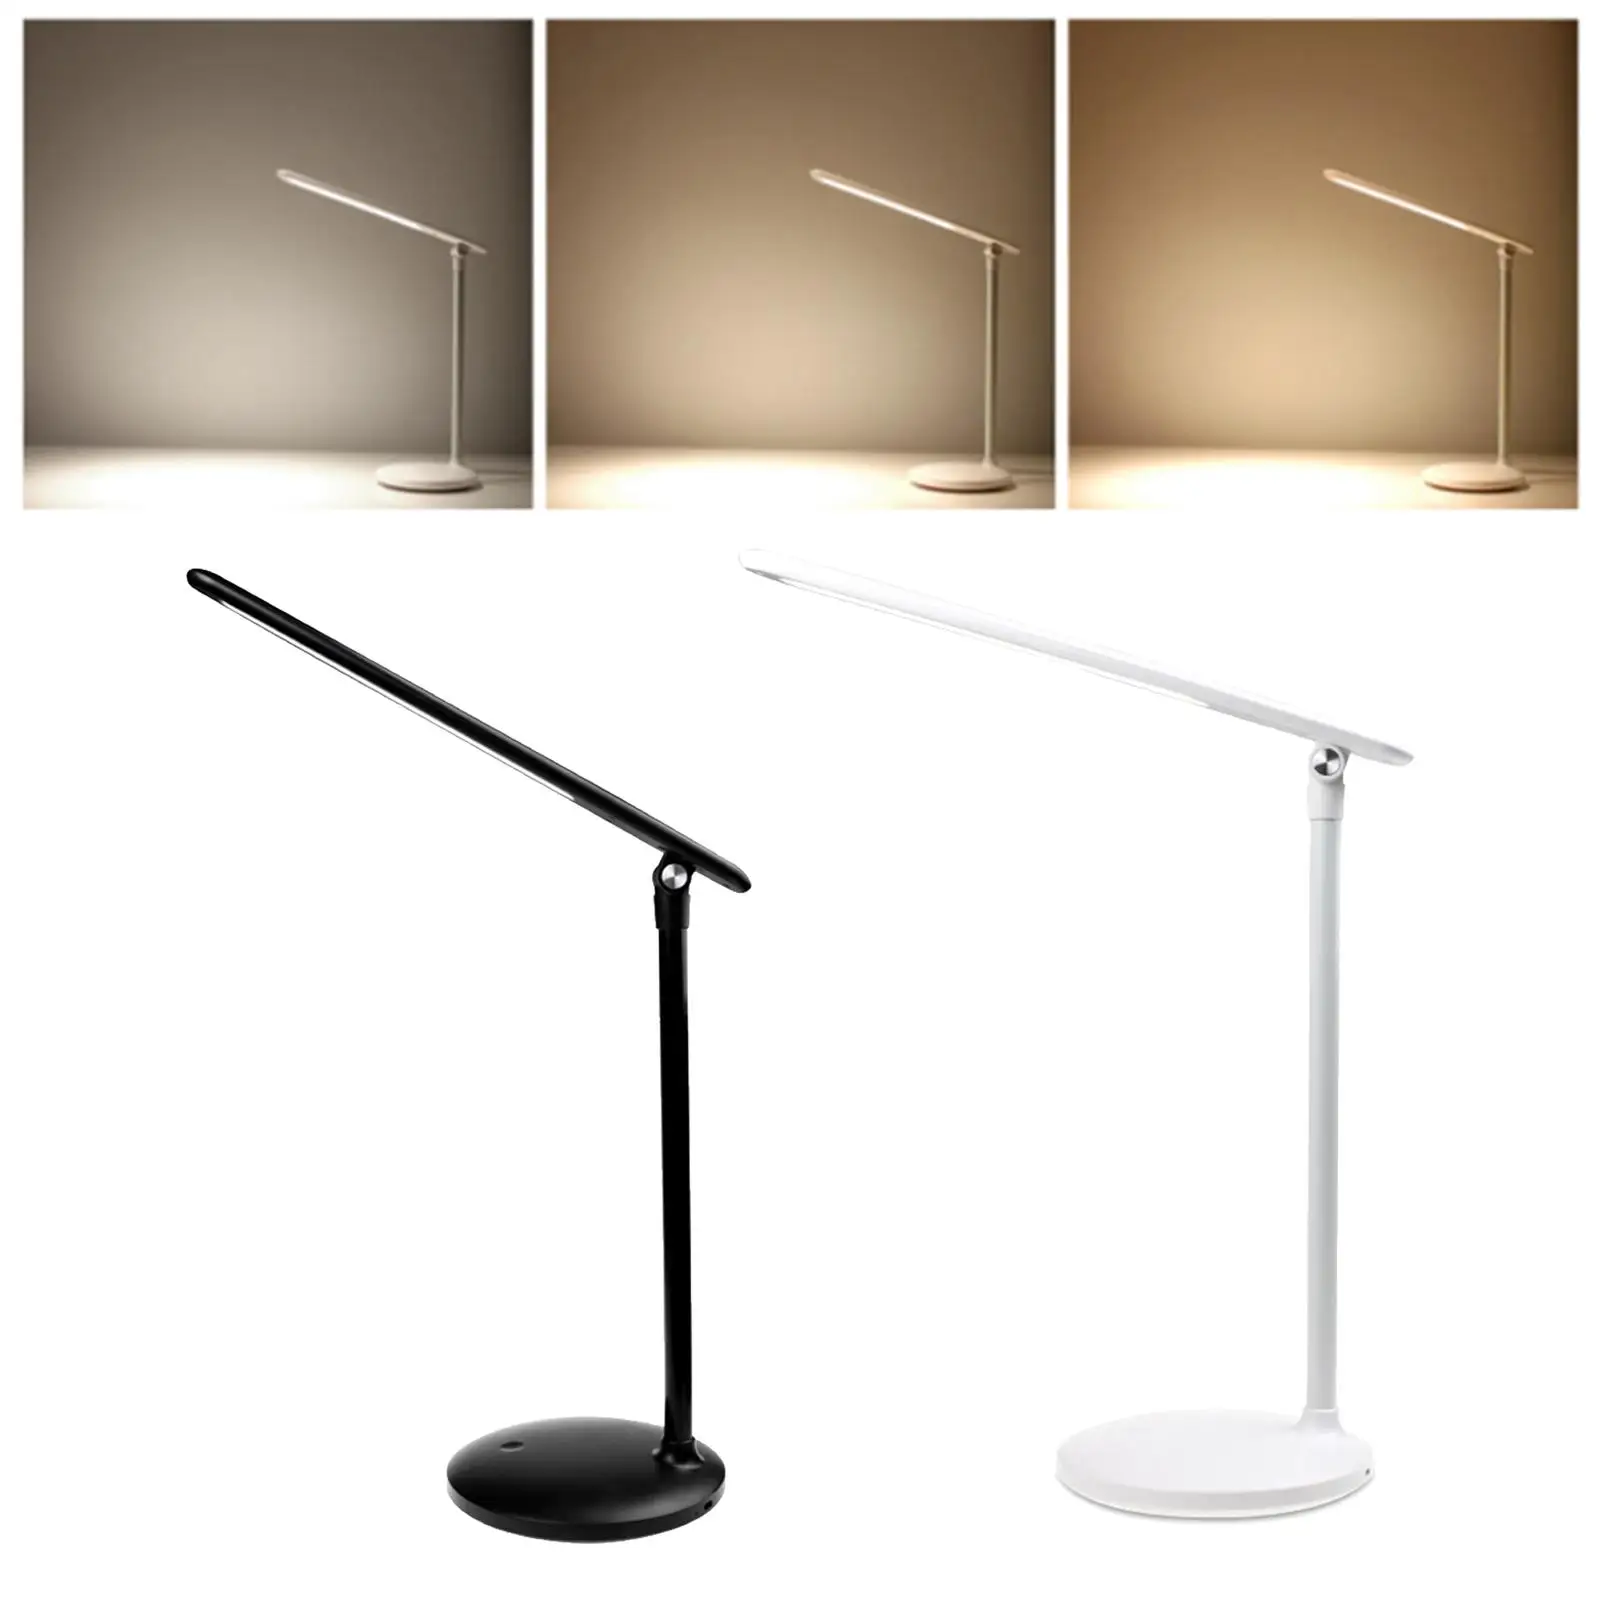 Dimmable Folded Adjustable USB Desk Lamp Table Desktop Night Light Flexible Bedroom Office Studying LED Lamps Eye Caring